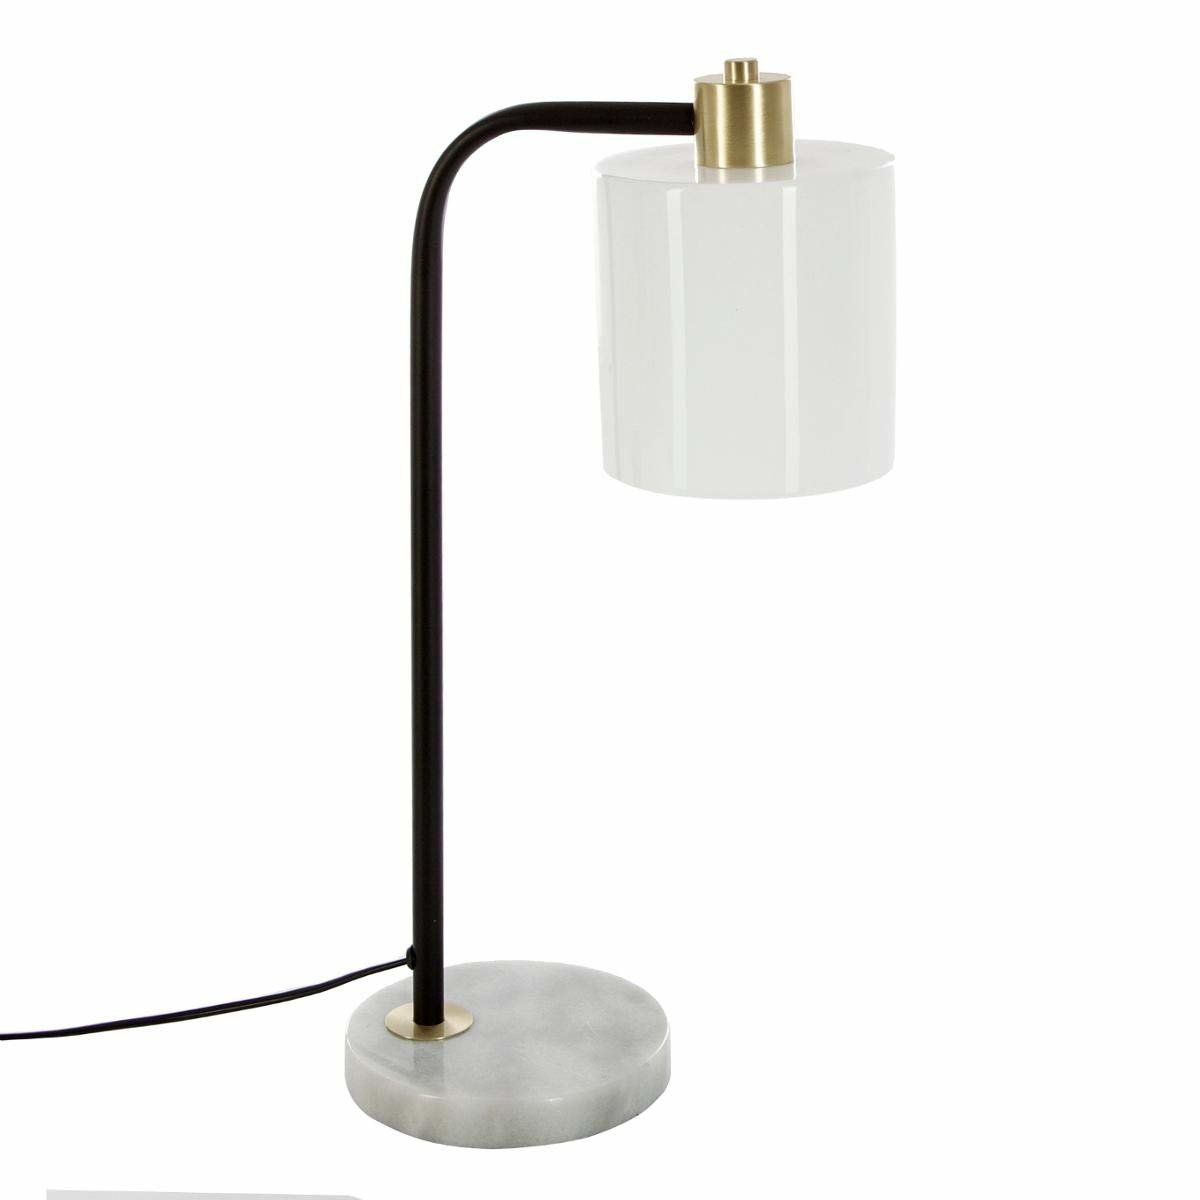 Atmosphera OLGA stolní lampa, bílá, výška 48 cm - EMAKO.CZ s.r.o.